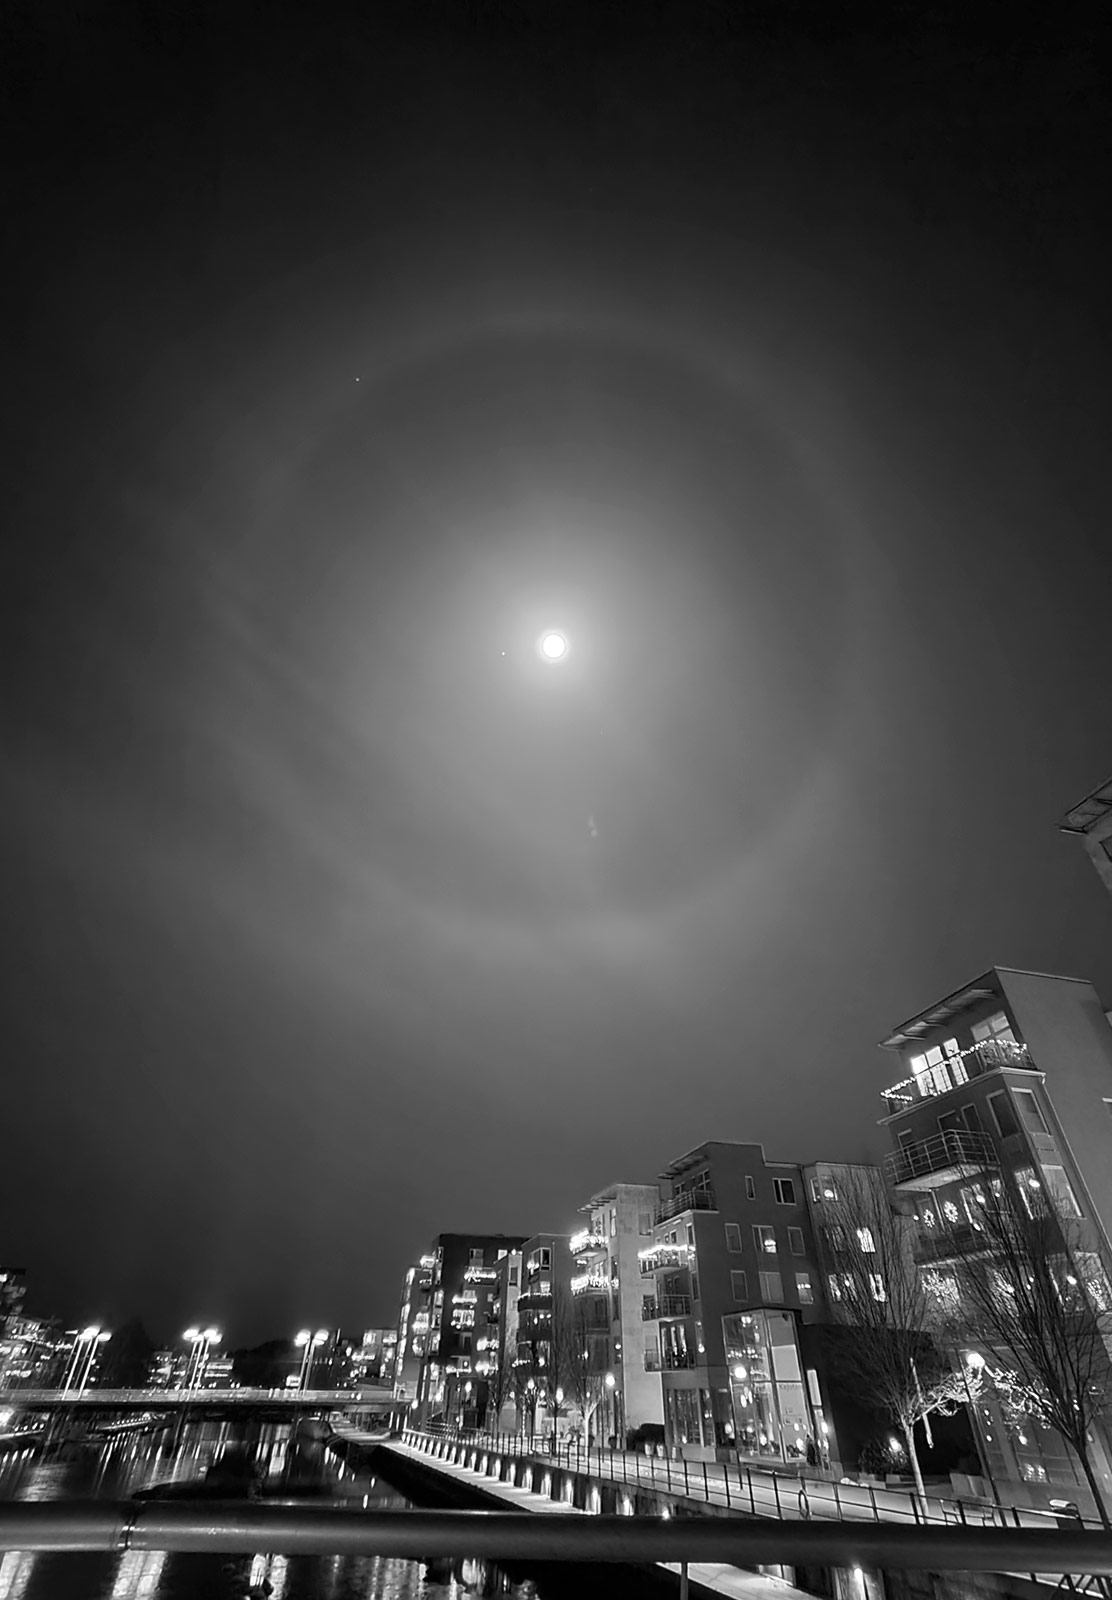 Light ring around full moon